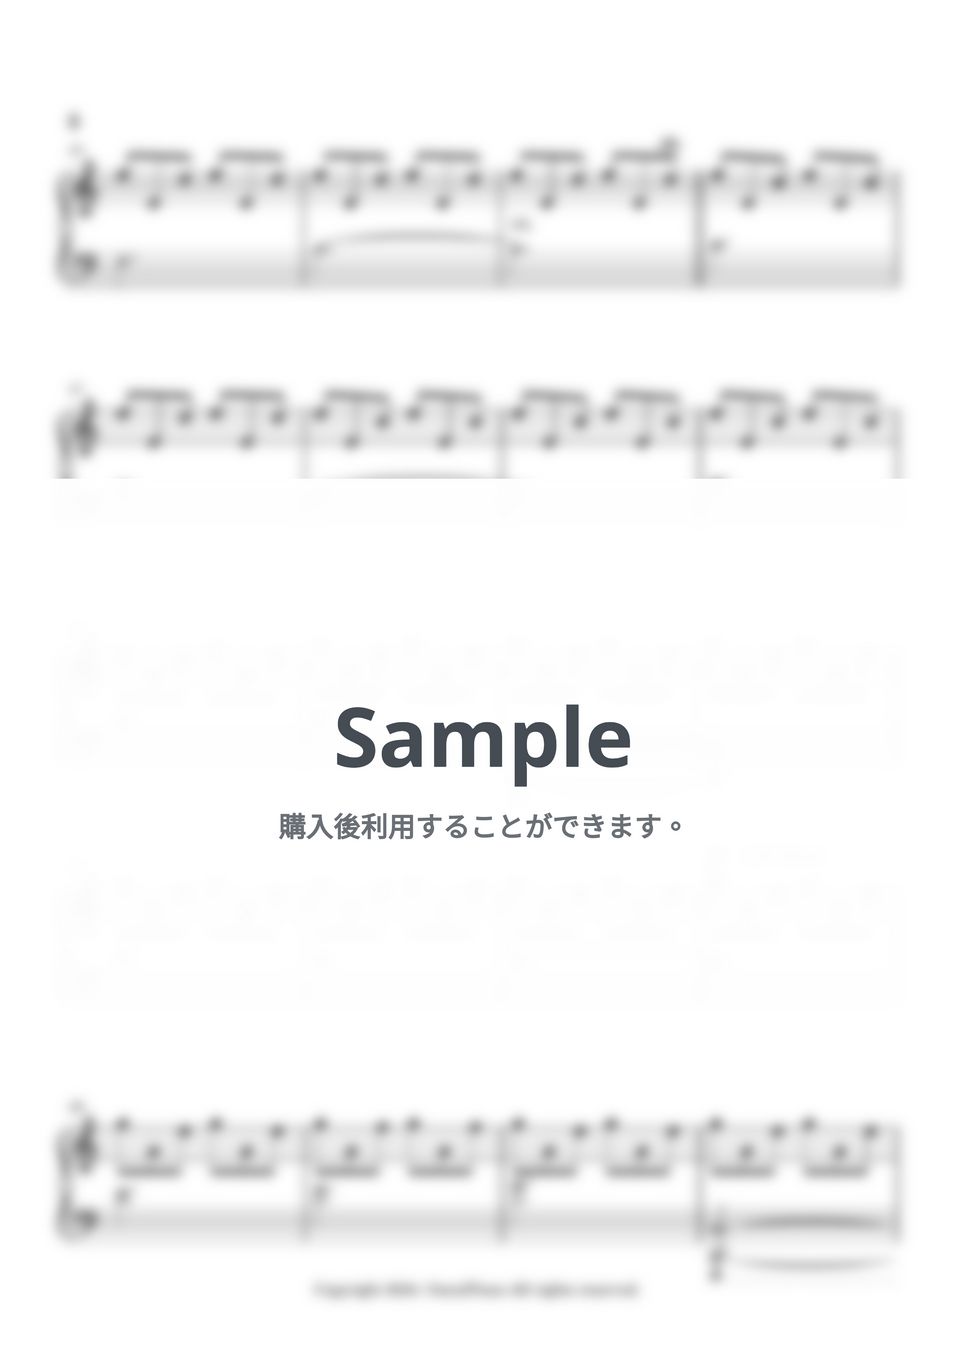 Joe Hisaishi - 聖域 (Sanctuary) (君たちはどう生きるか OST track 14) by 今日ピアノ(Oneul Piano)